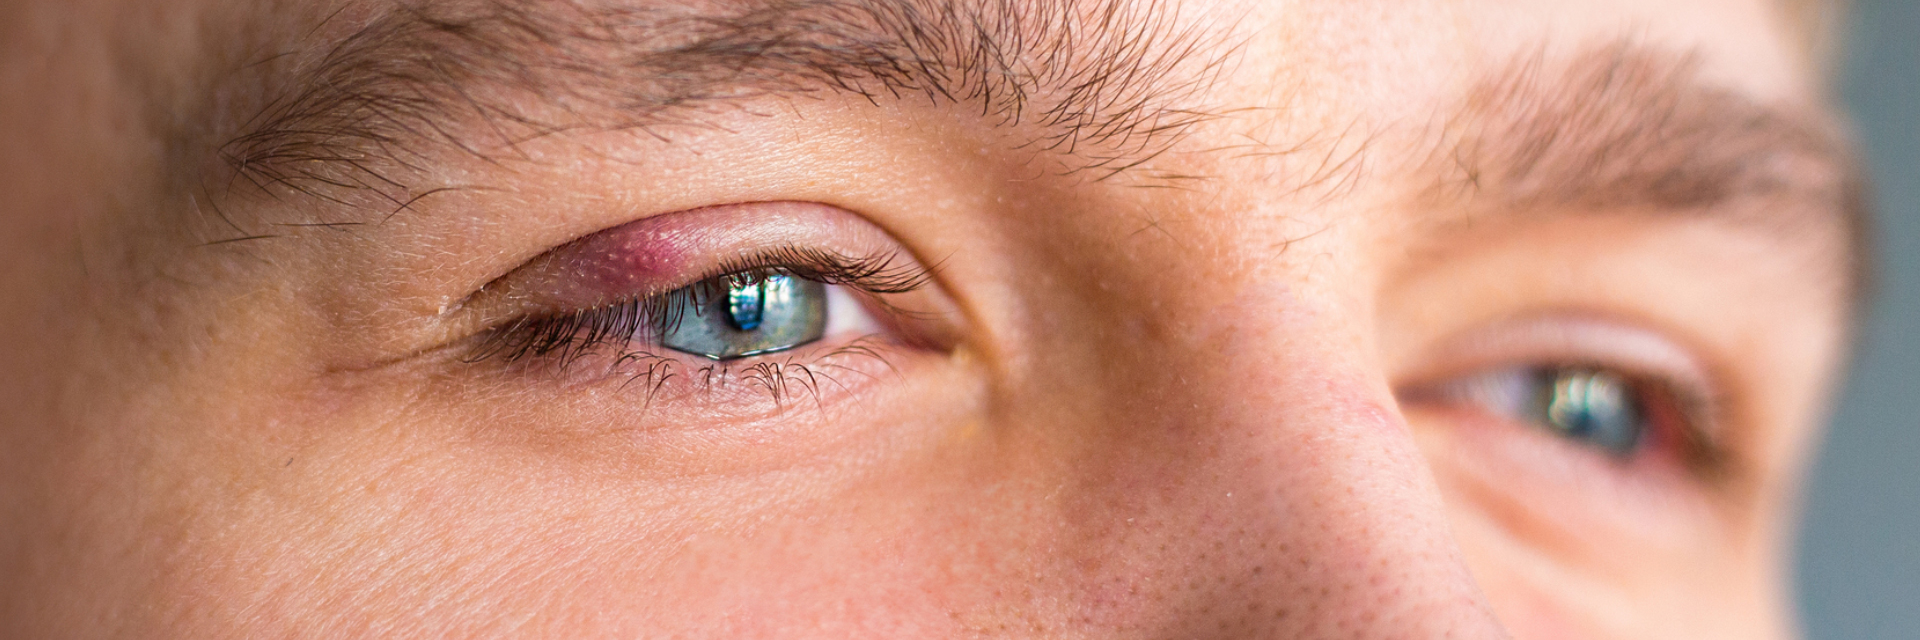 Eyelid infection (blepharitis)